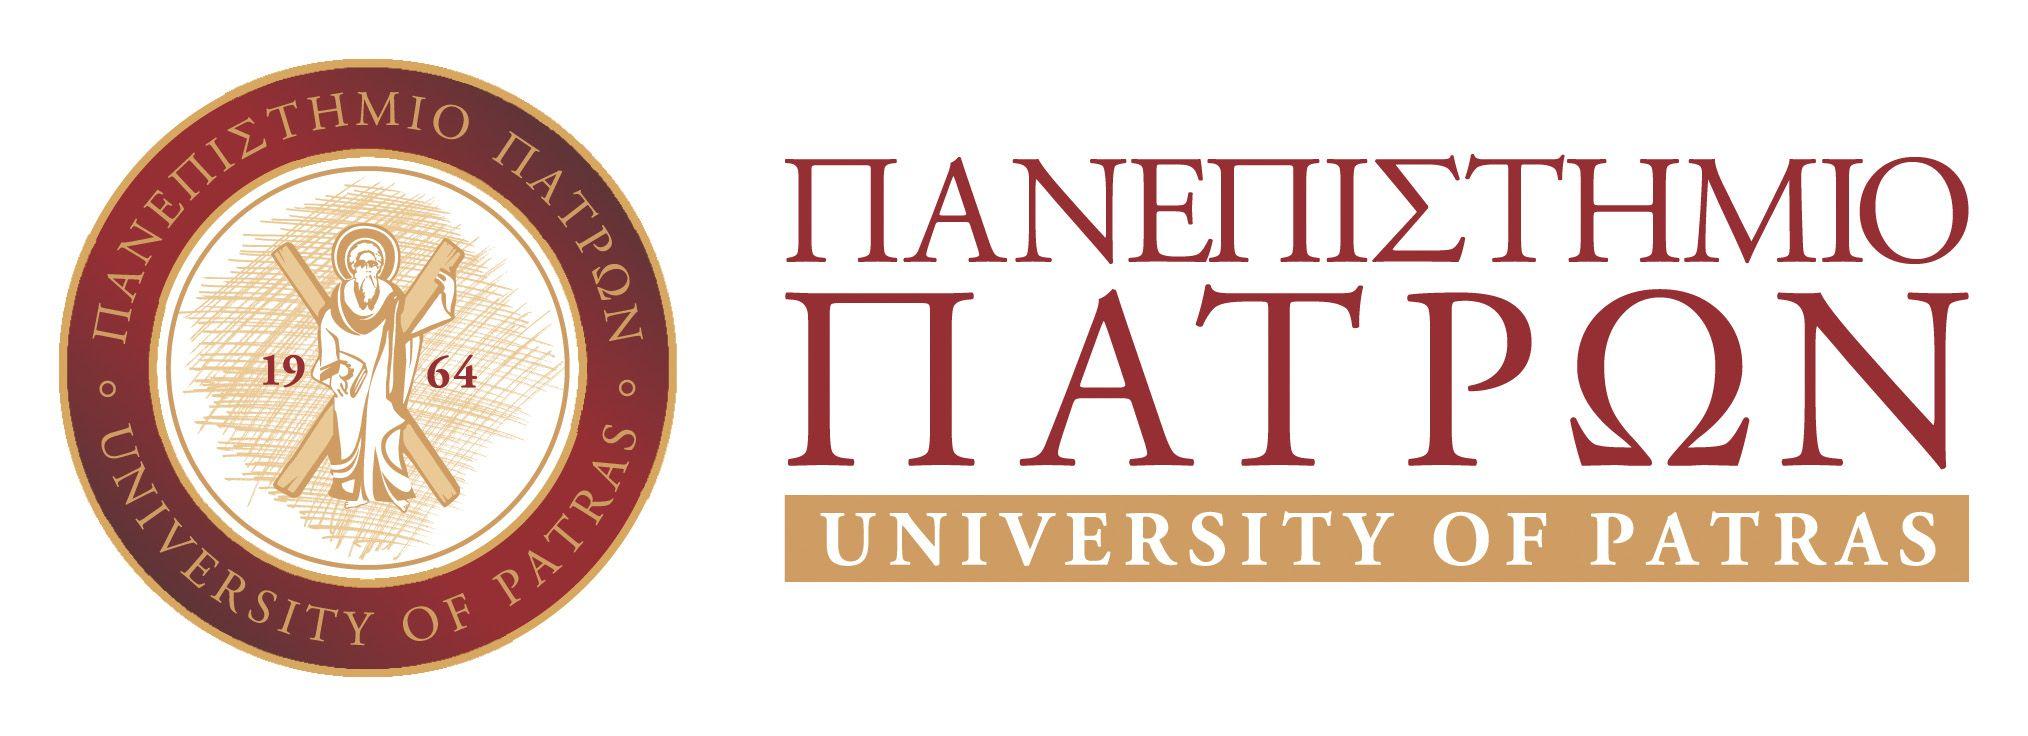 You Are Here Logo - Trademark. University of Patras